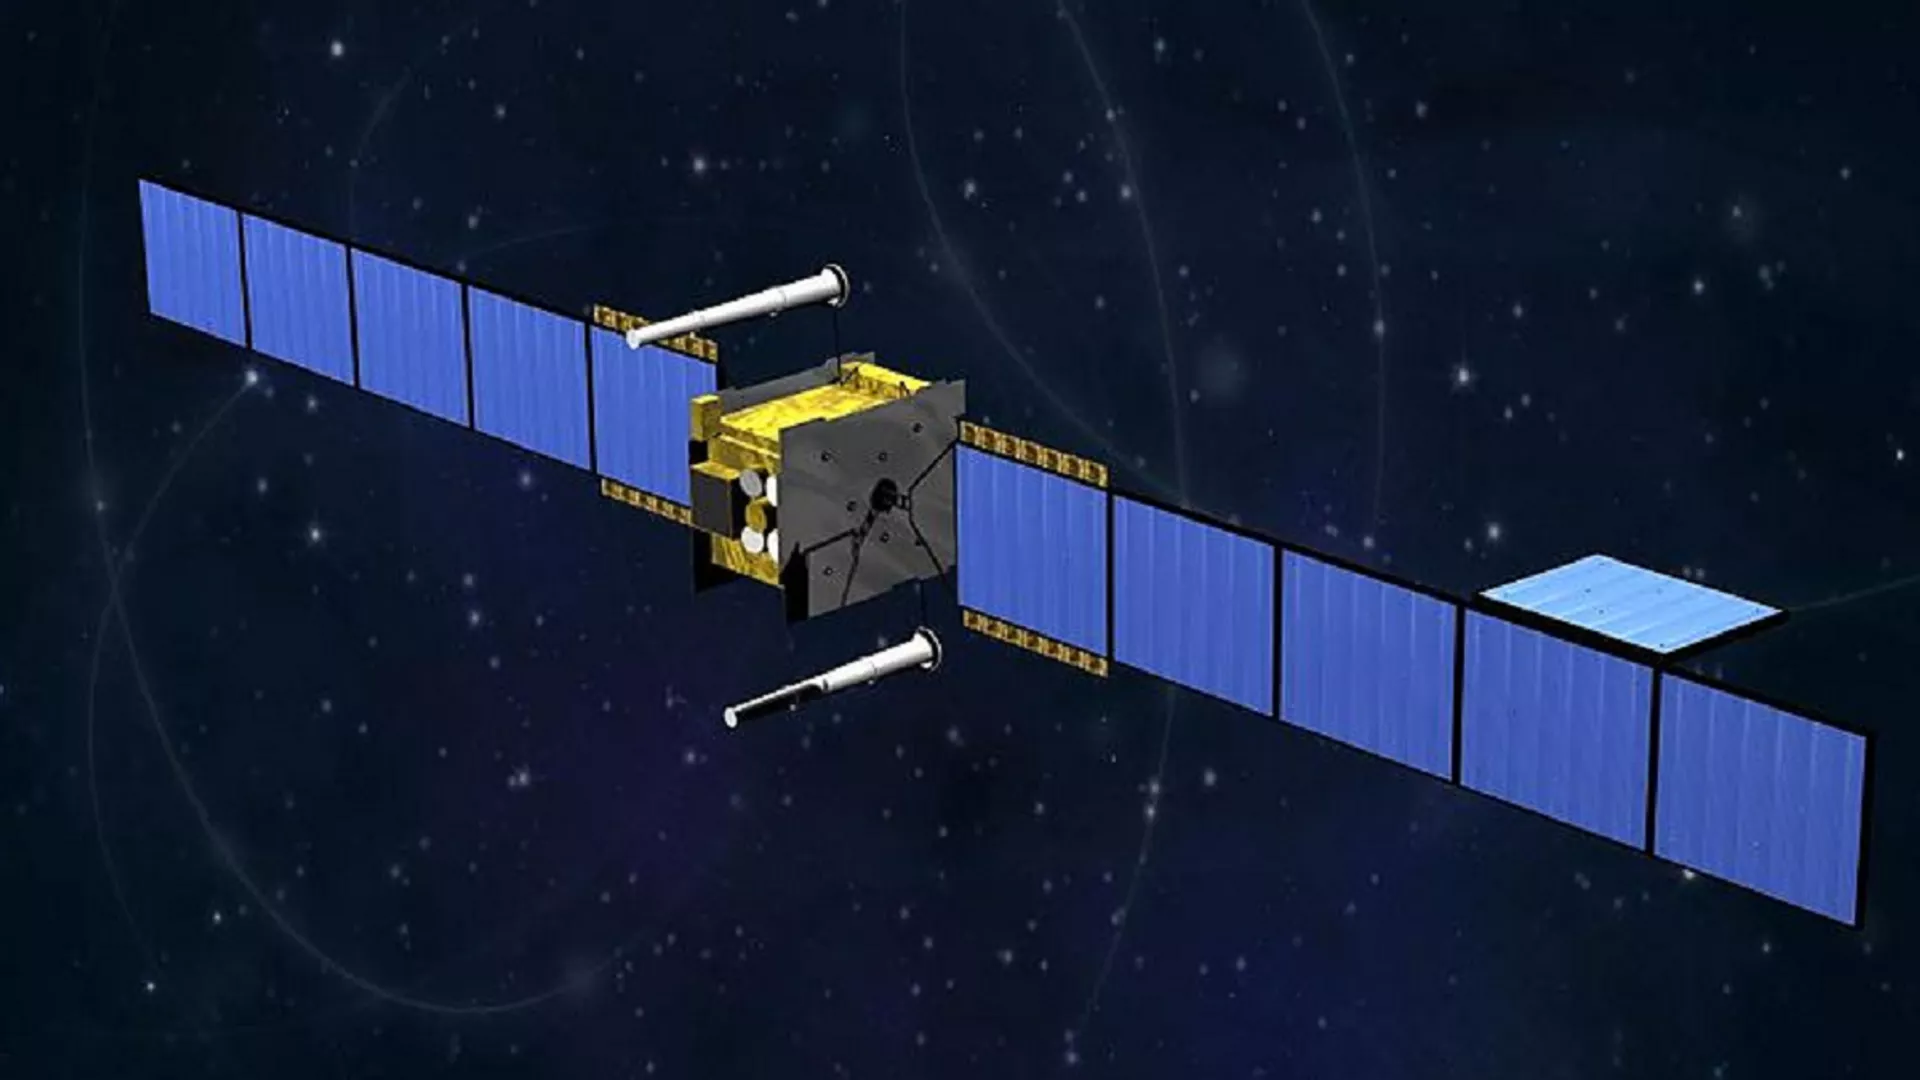 US Fines Major TV Provider $150,000 Over Space Debris After Failed Satellite Deorbit